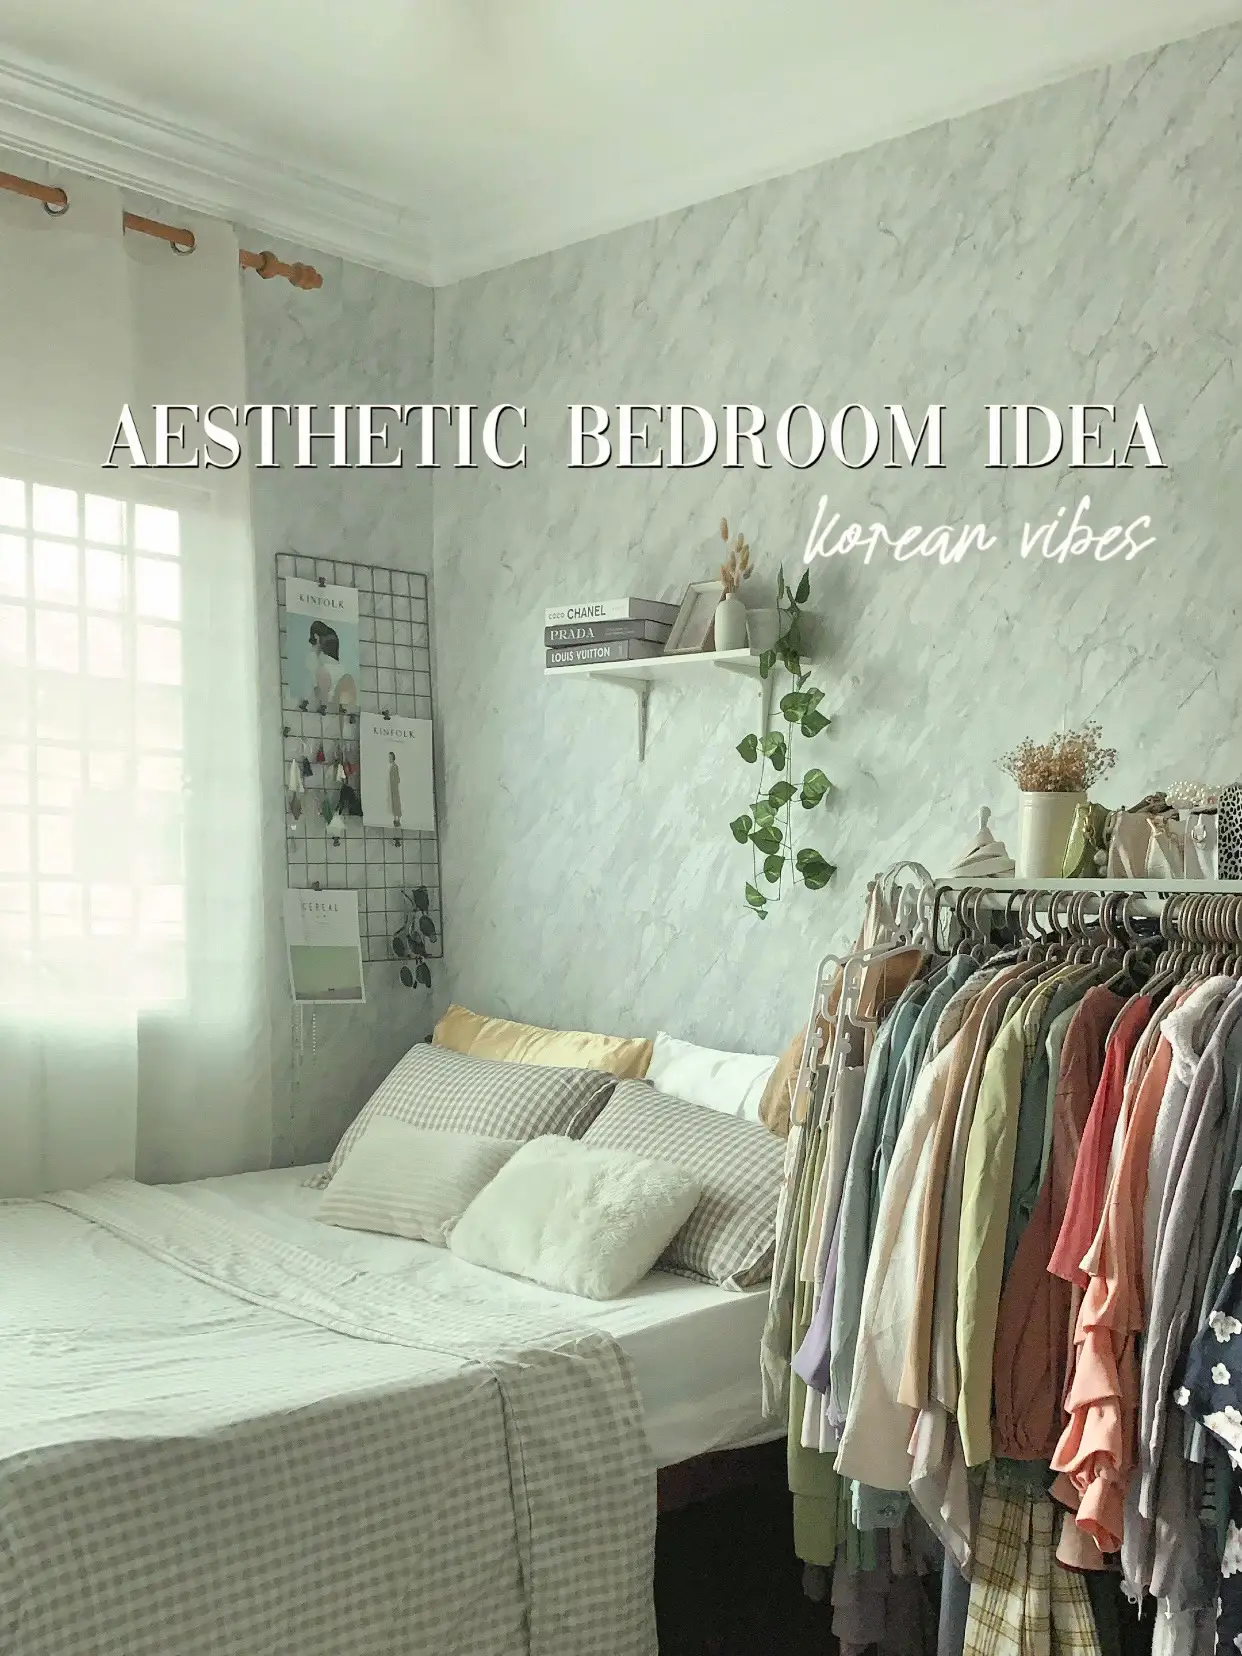 Louis Vuitton Wall  Cute room decor, Pinterest room decor, Room makeover  inspiration